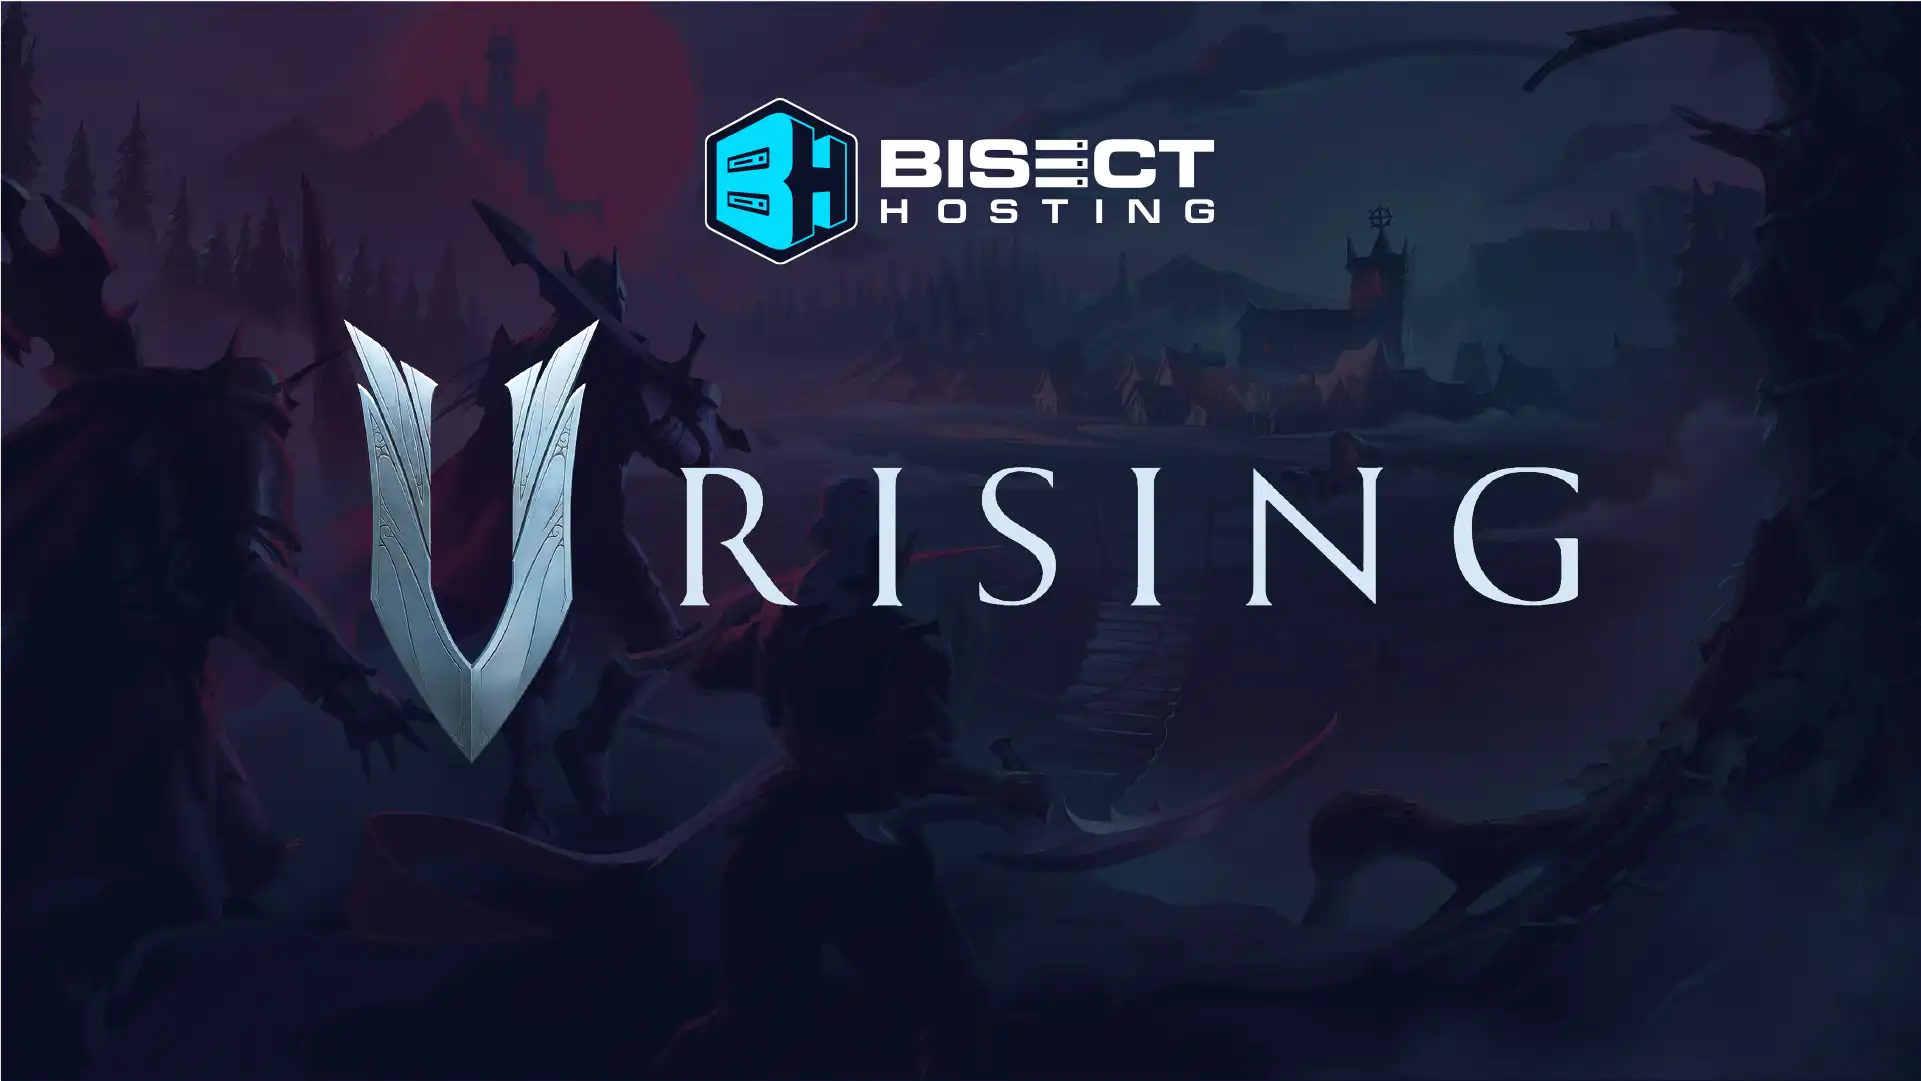 V Rising Blood Bosses: All Locations & Levels